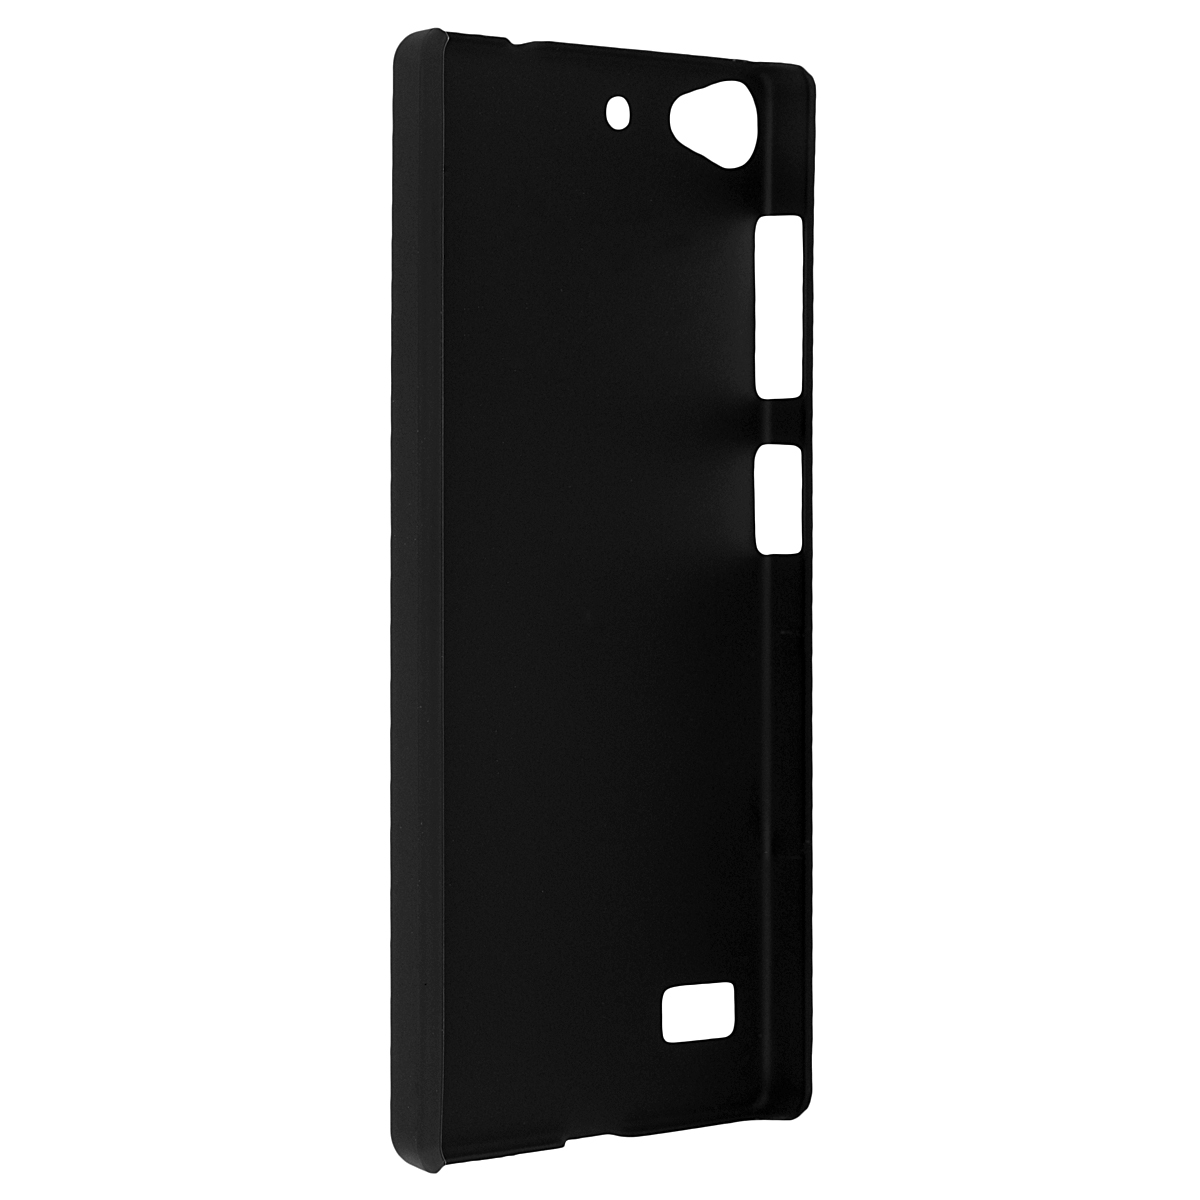 Skinbox Shield 4People   Lenovo Vibe X2, Black